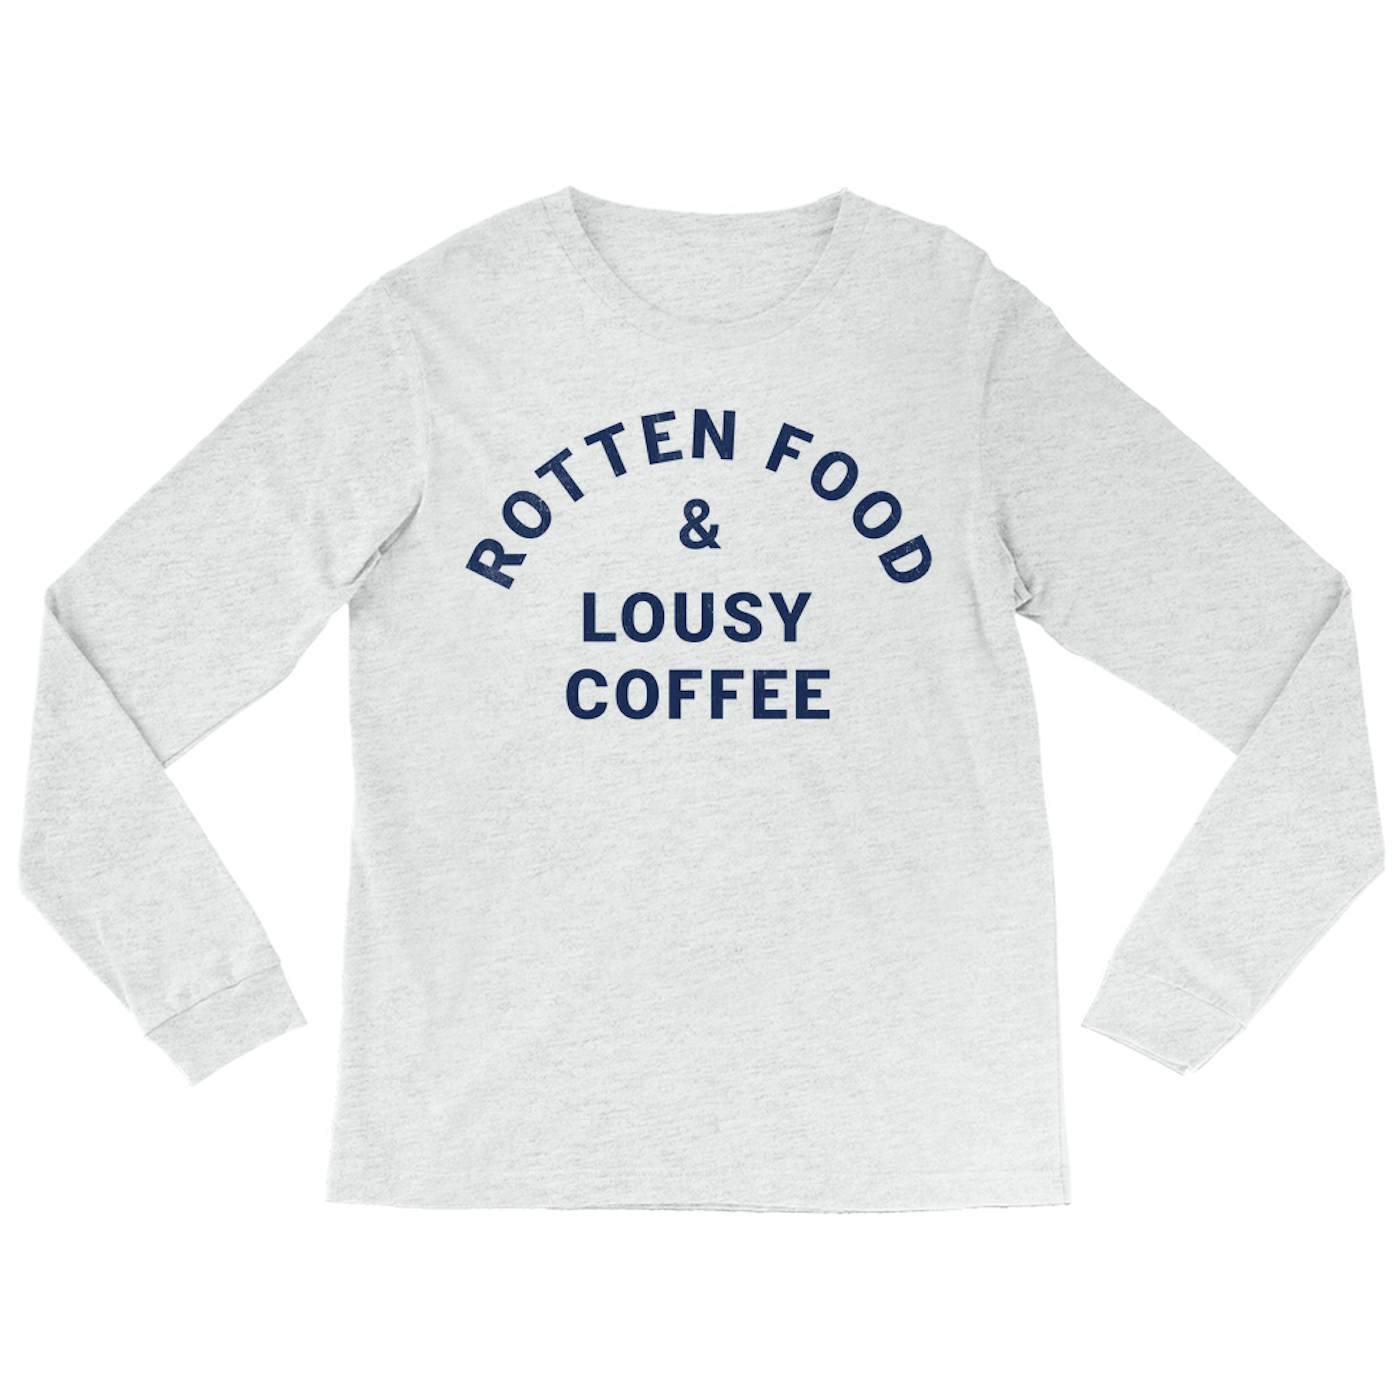 Joe Cocker Long Sleeve Shirt | Rotten Food & Lousy Coffee Tee worn by Joe Cocker Shirt